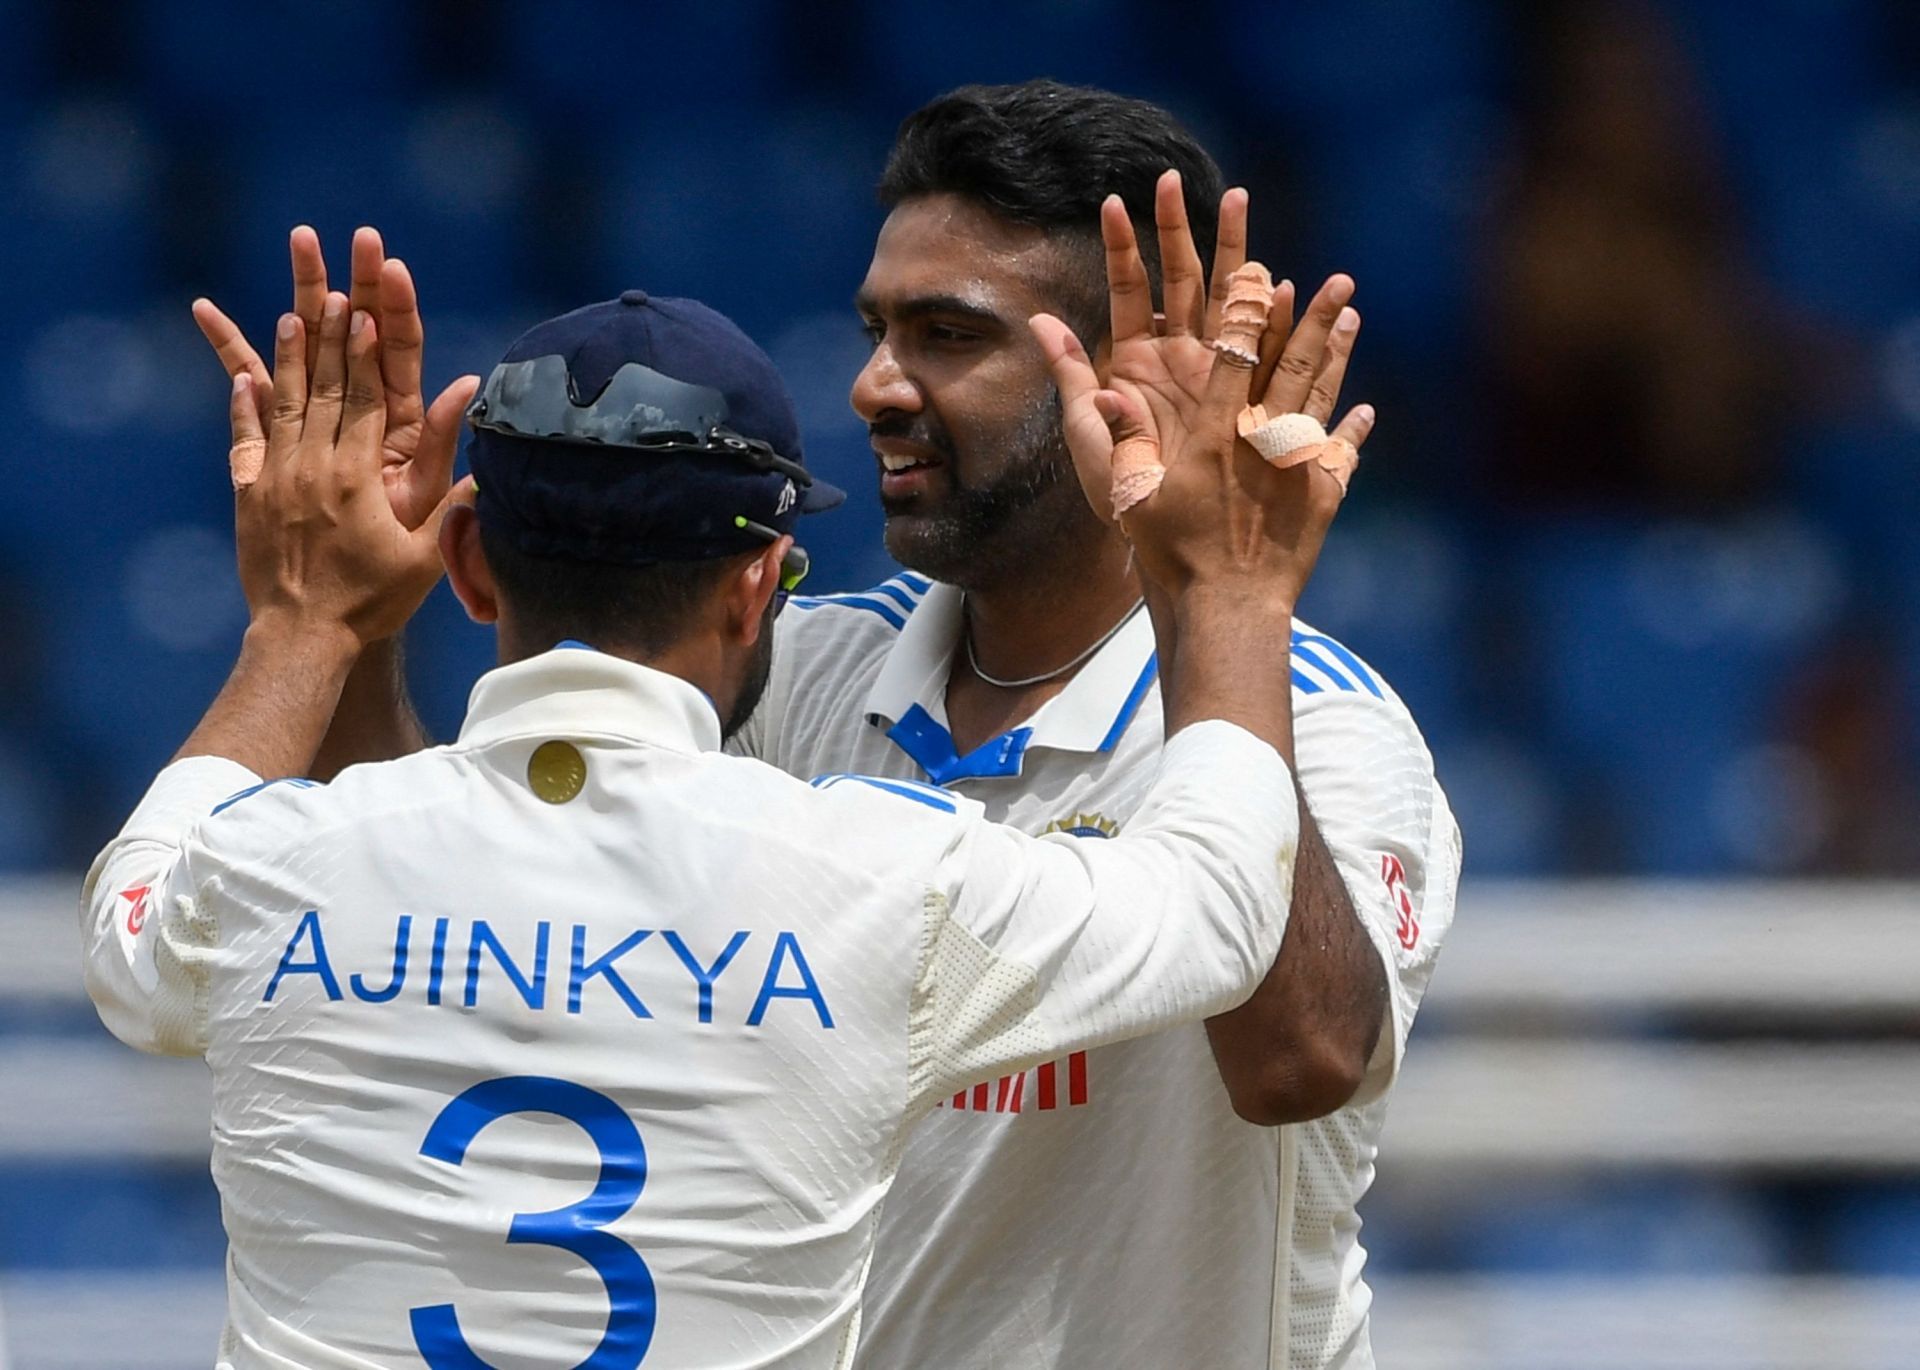 Ravichandran Ashwin and Ajinkya Rahane endured contrasting fortunes in the second Test